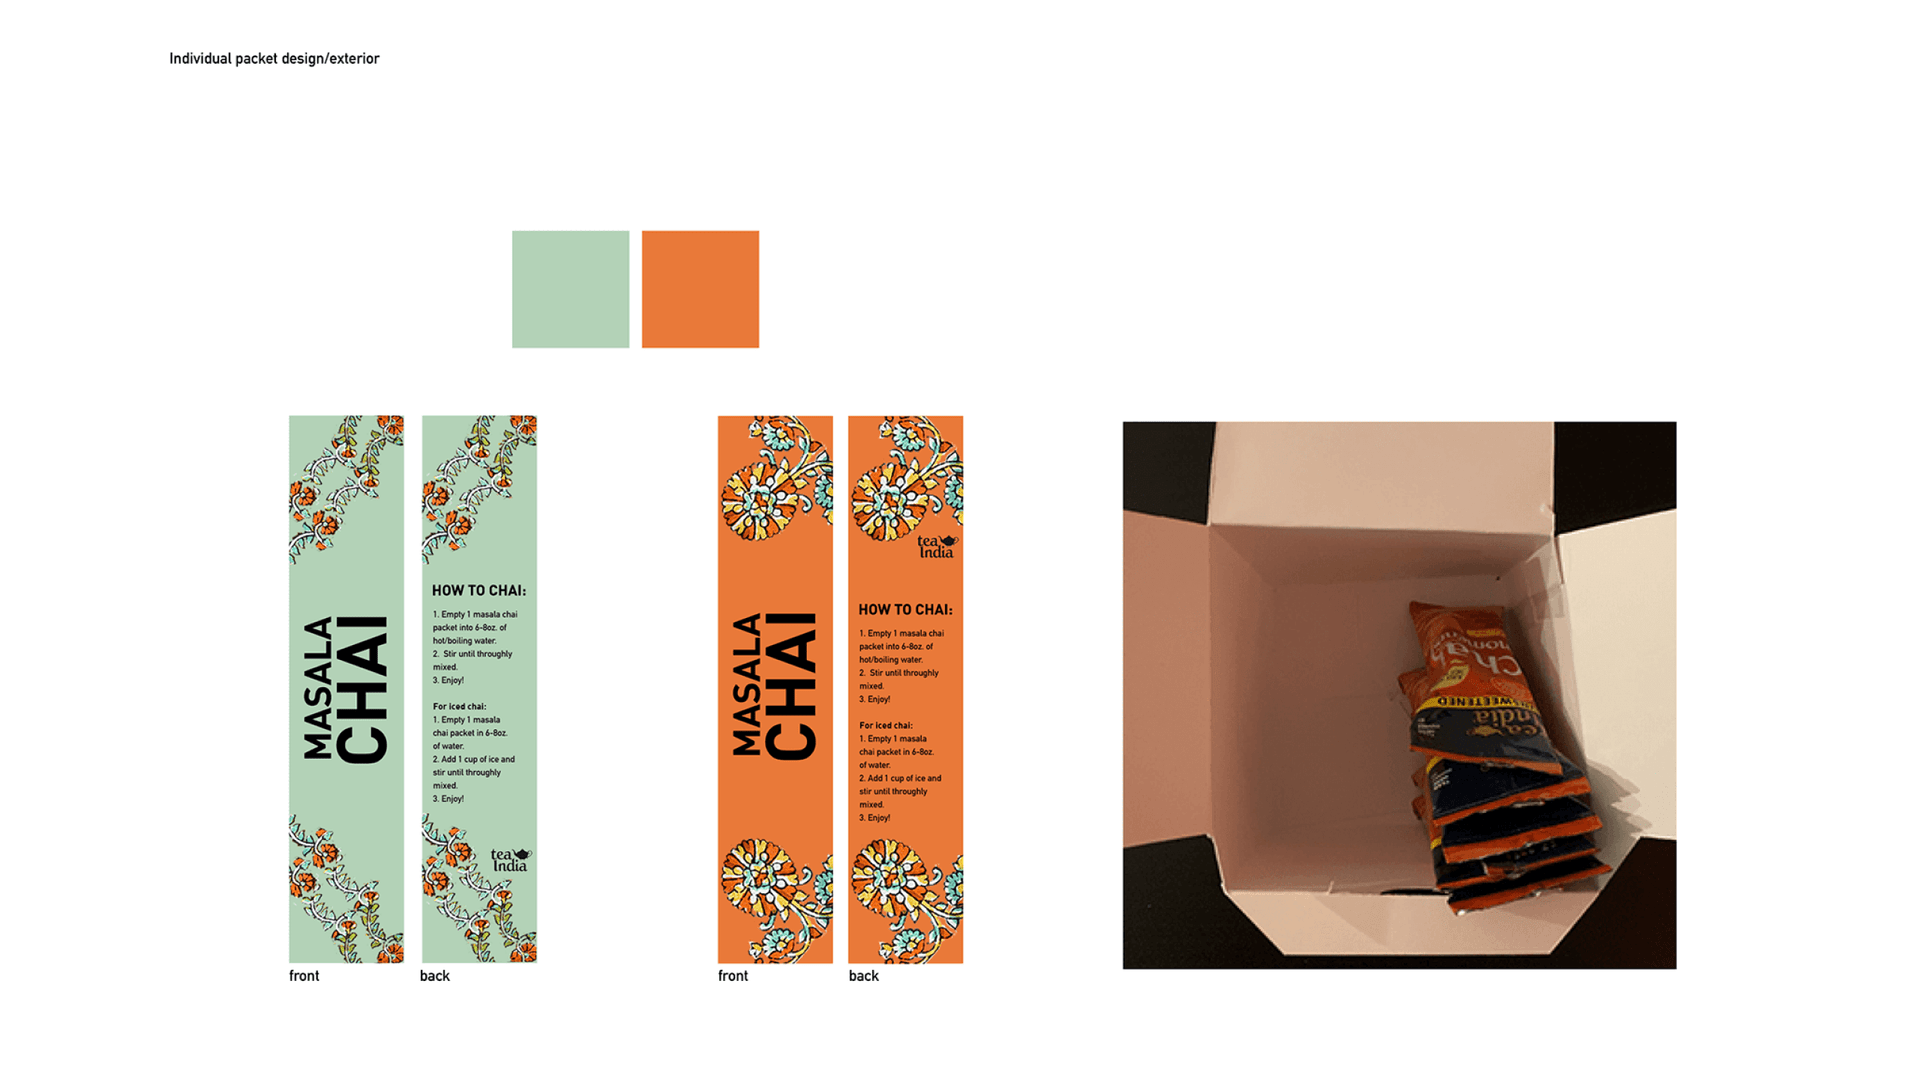 Masala Chai Packaging